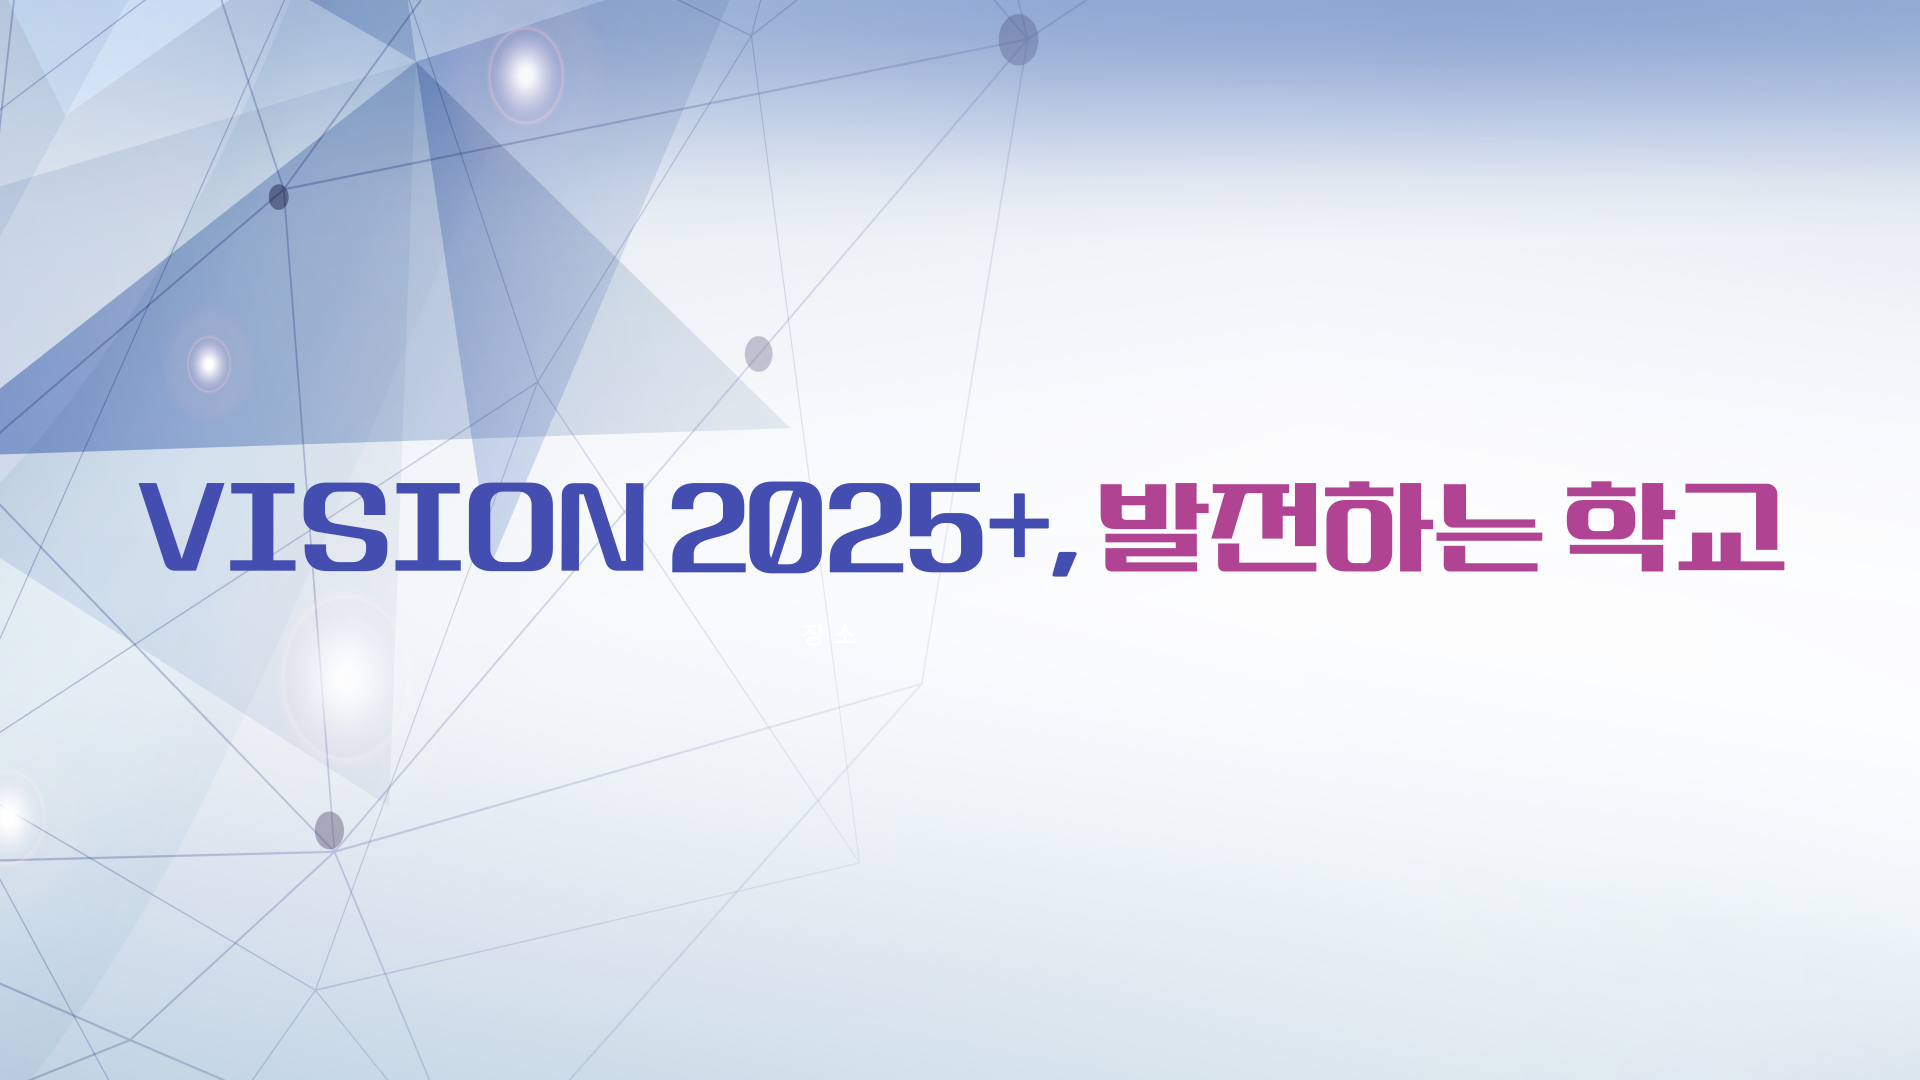 VISION 2025+, 발전하는 학교 이미지